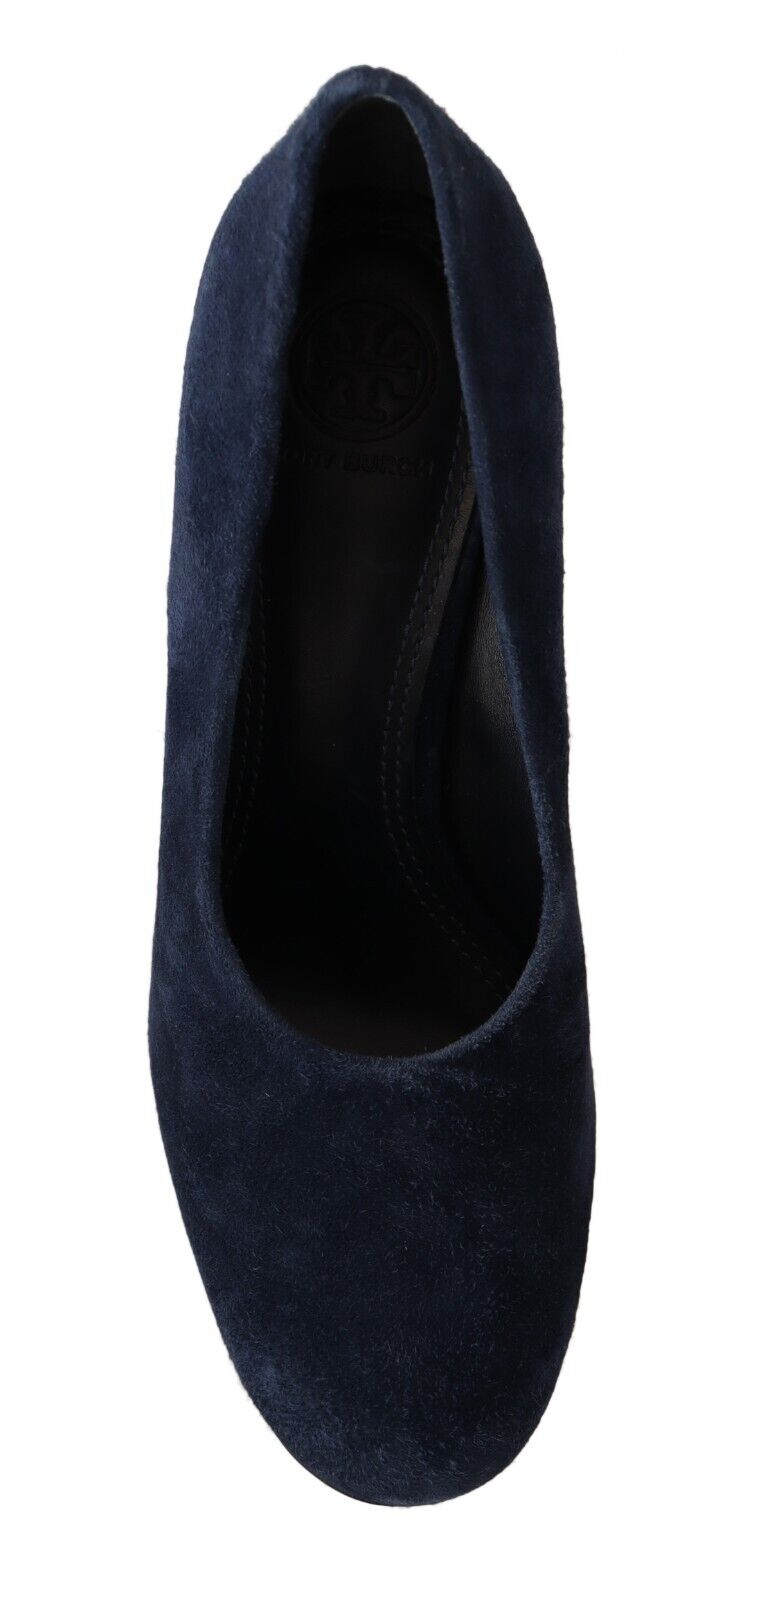 Navy Blue Suede Leather Block Heels Pumps Shoes